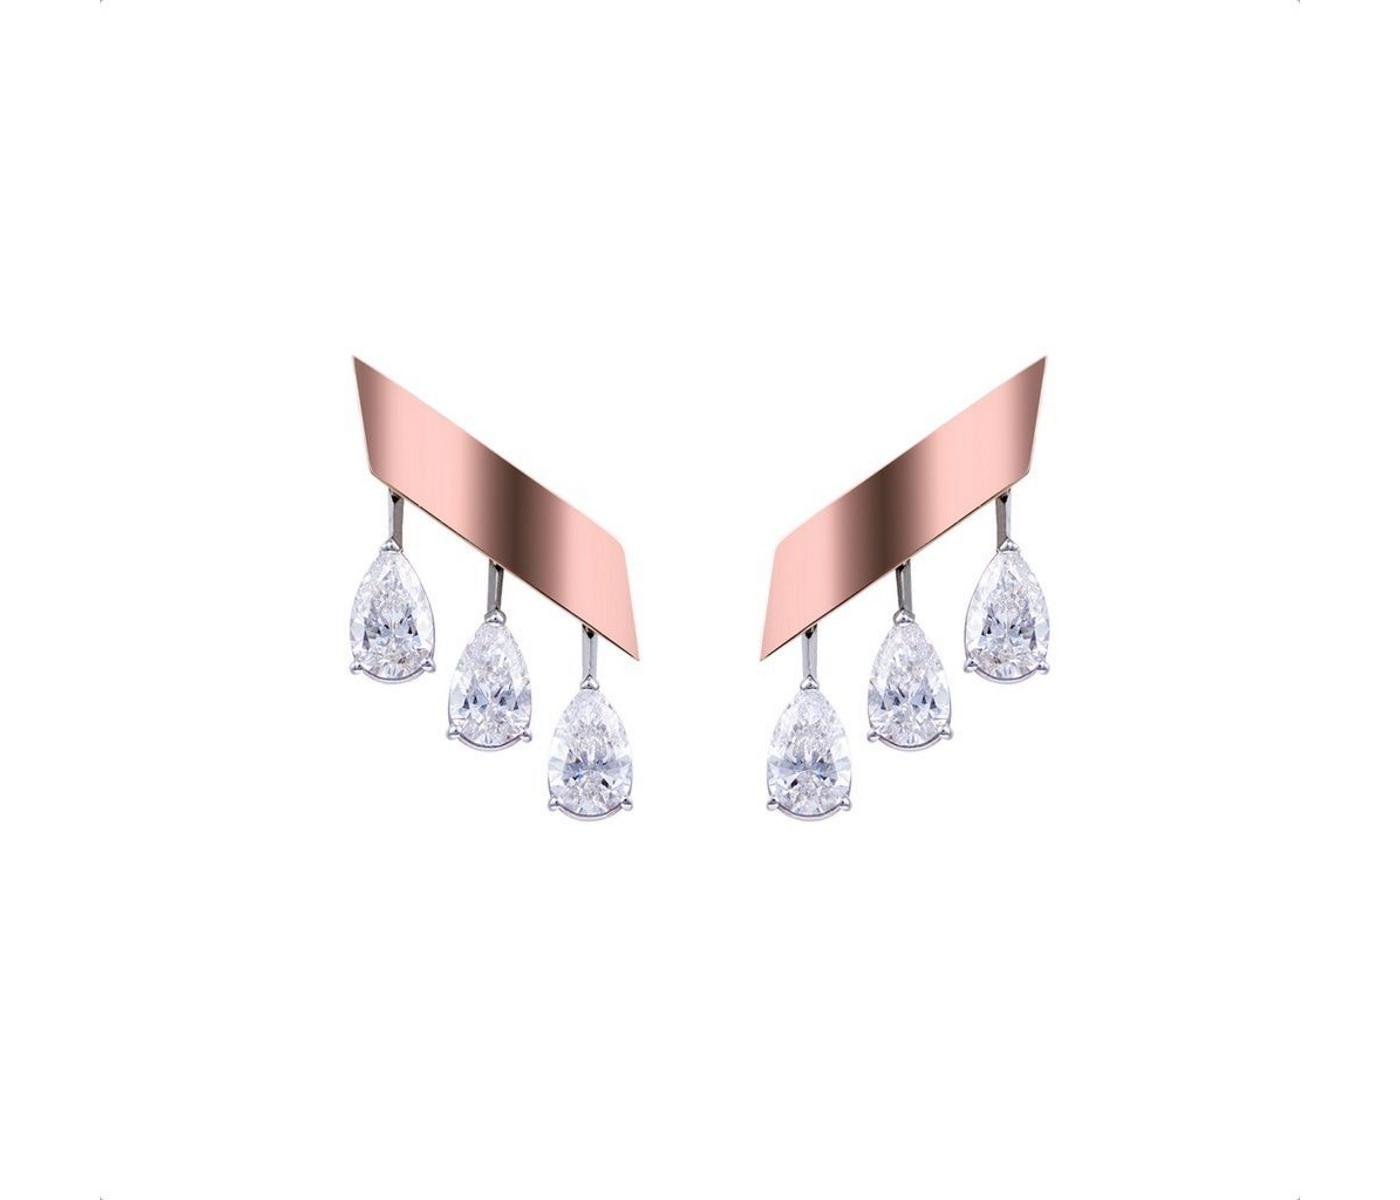 Earrings by Orlov